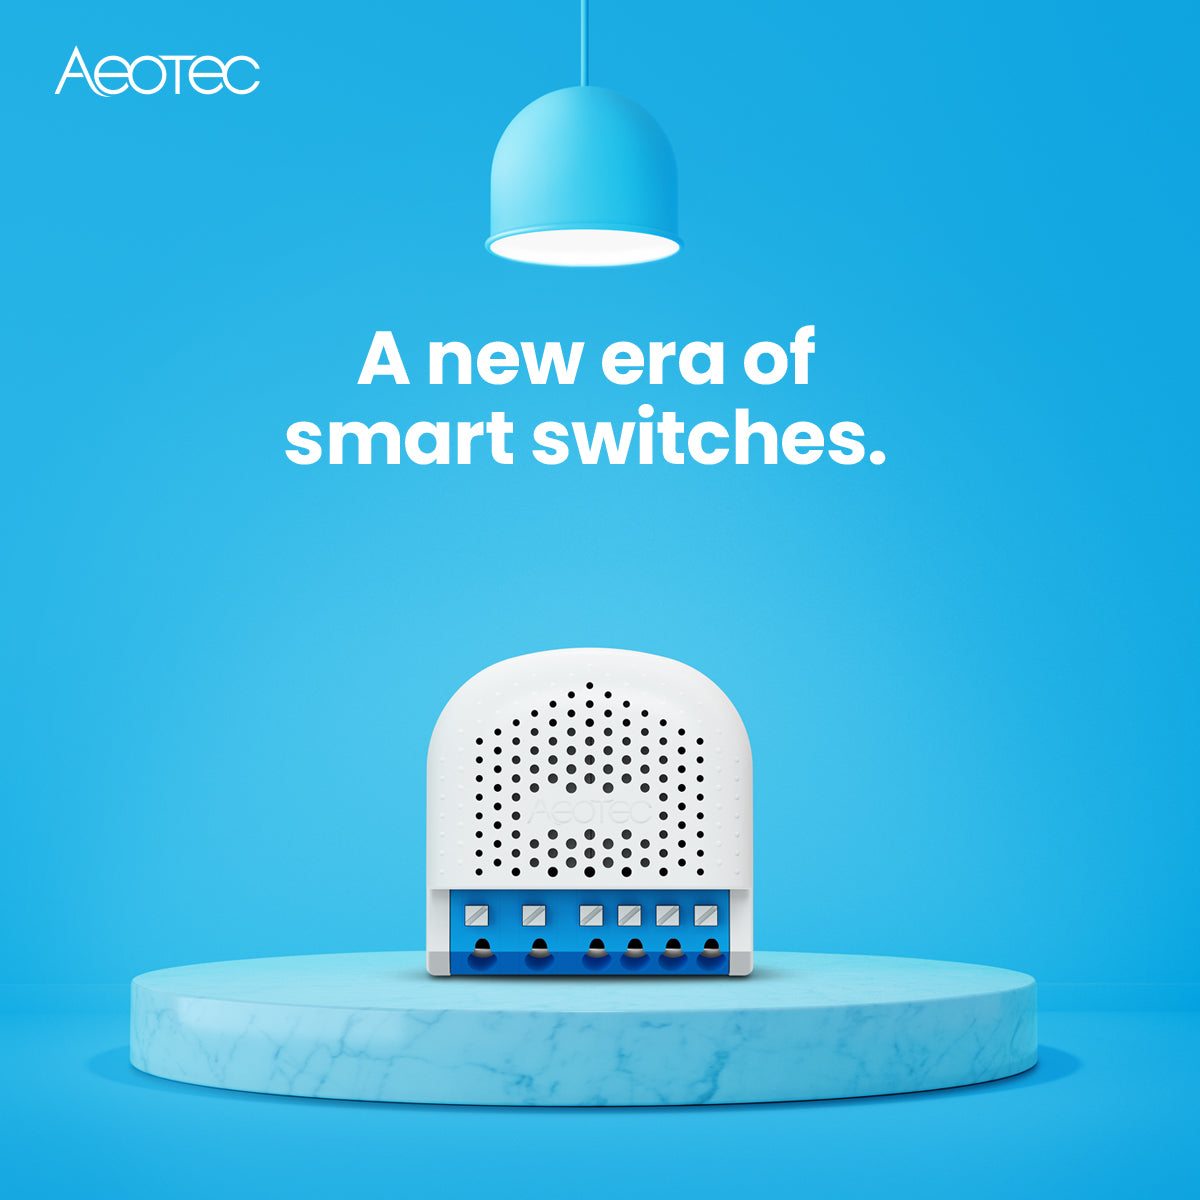 Aeotec Pico Dual Switch Zigbee